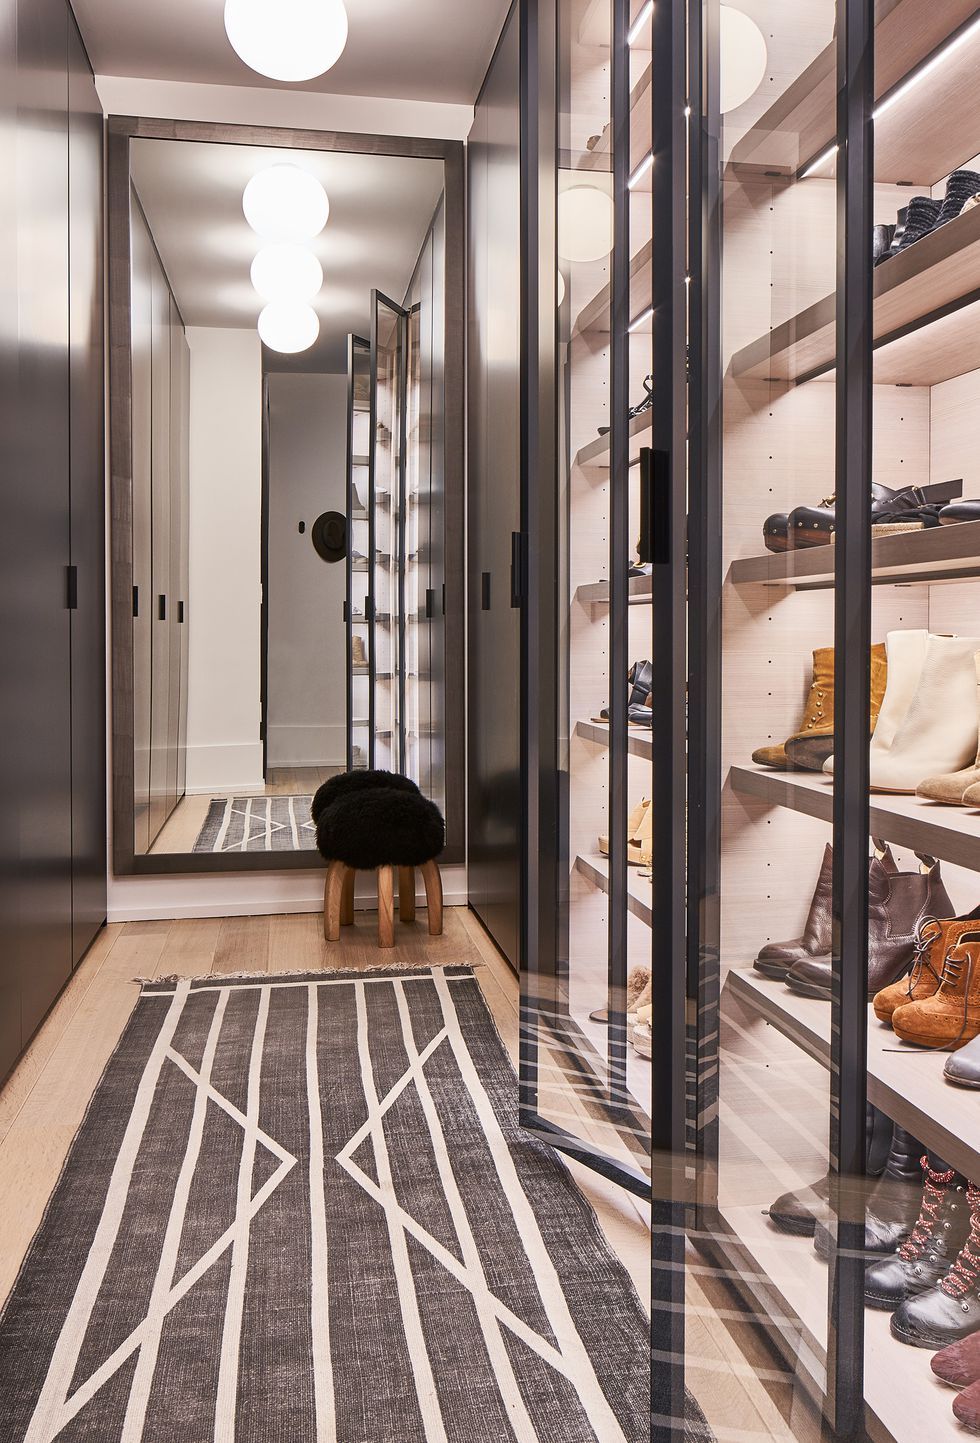 8 Creative Shoe Storage Ideas that Double as Decor